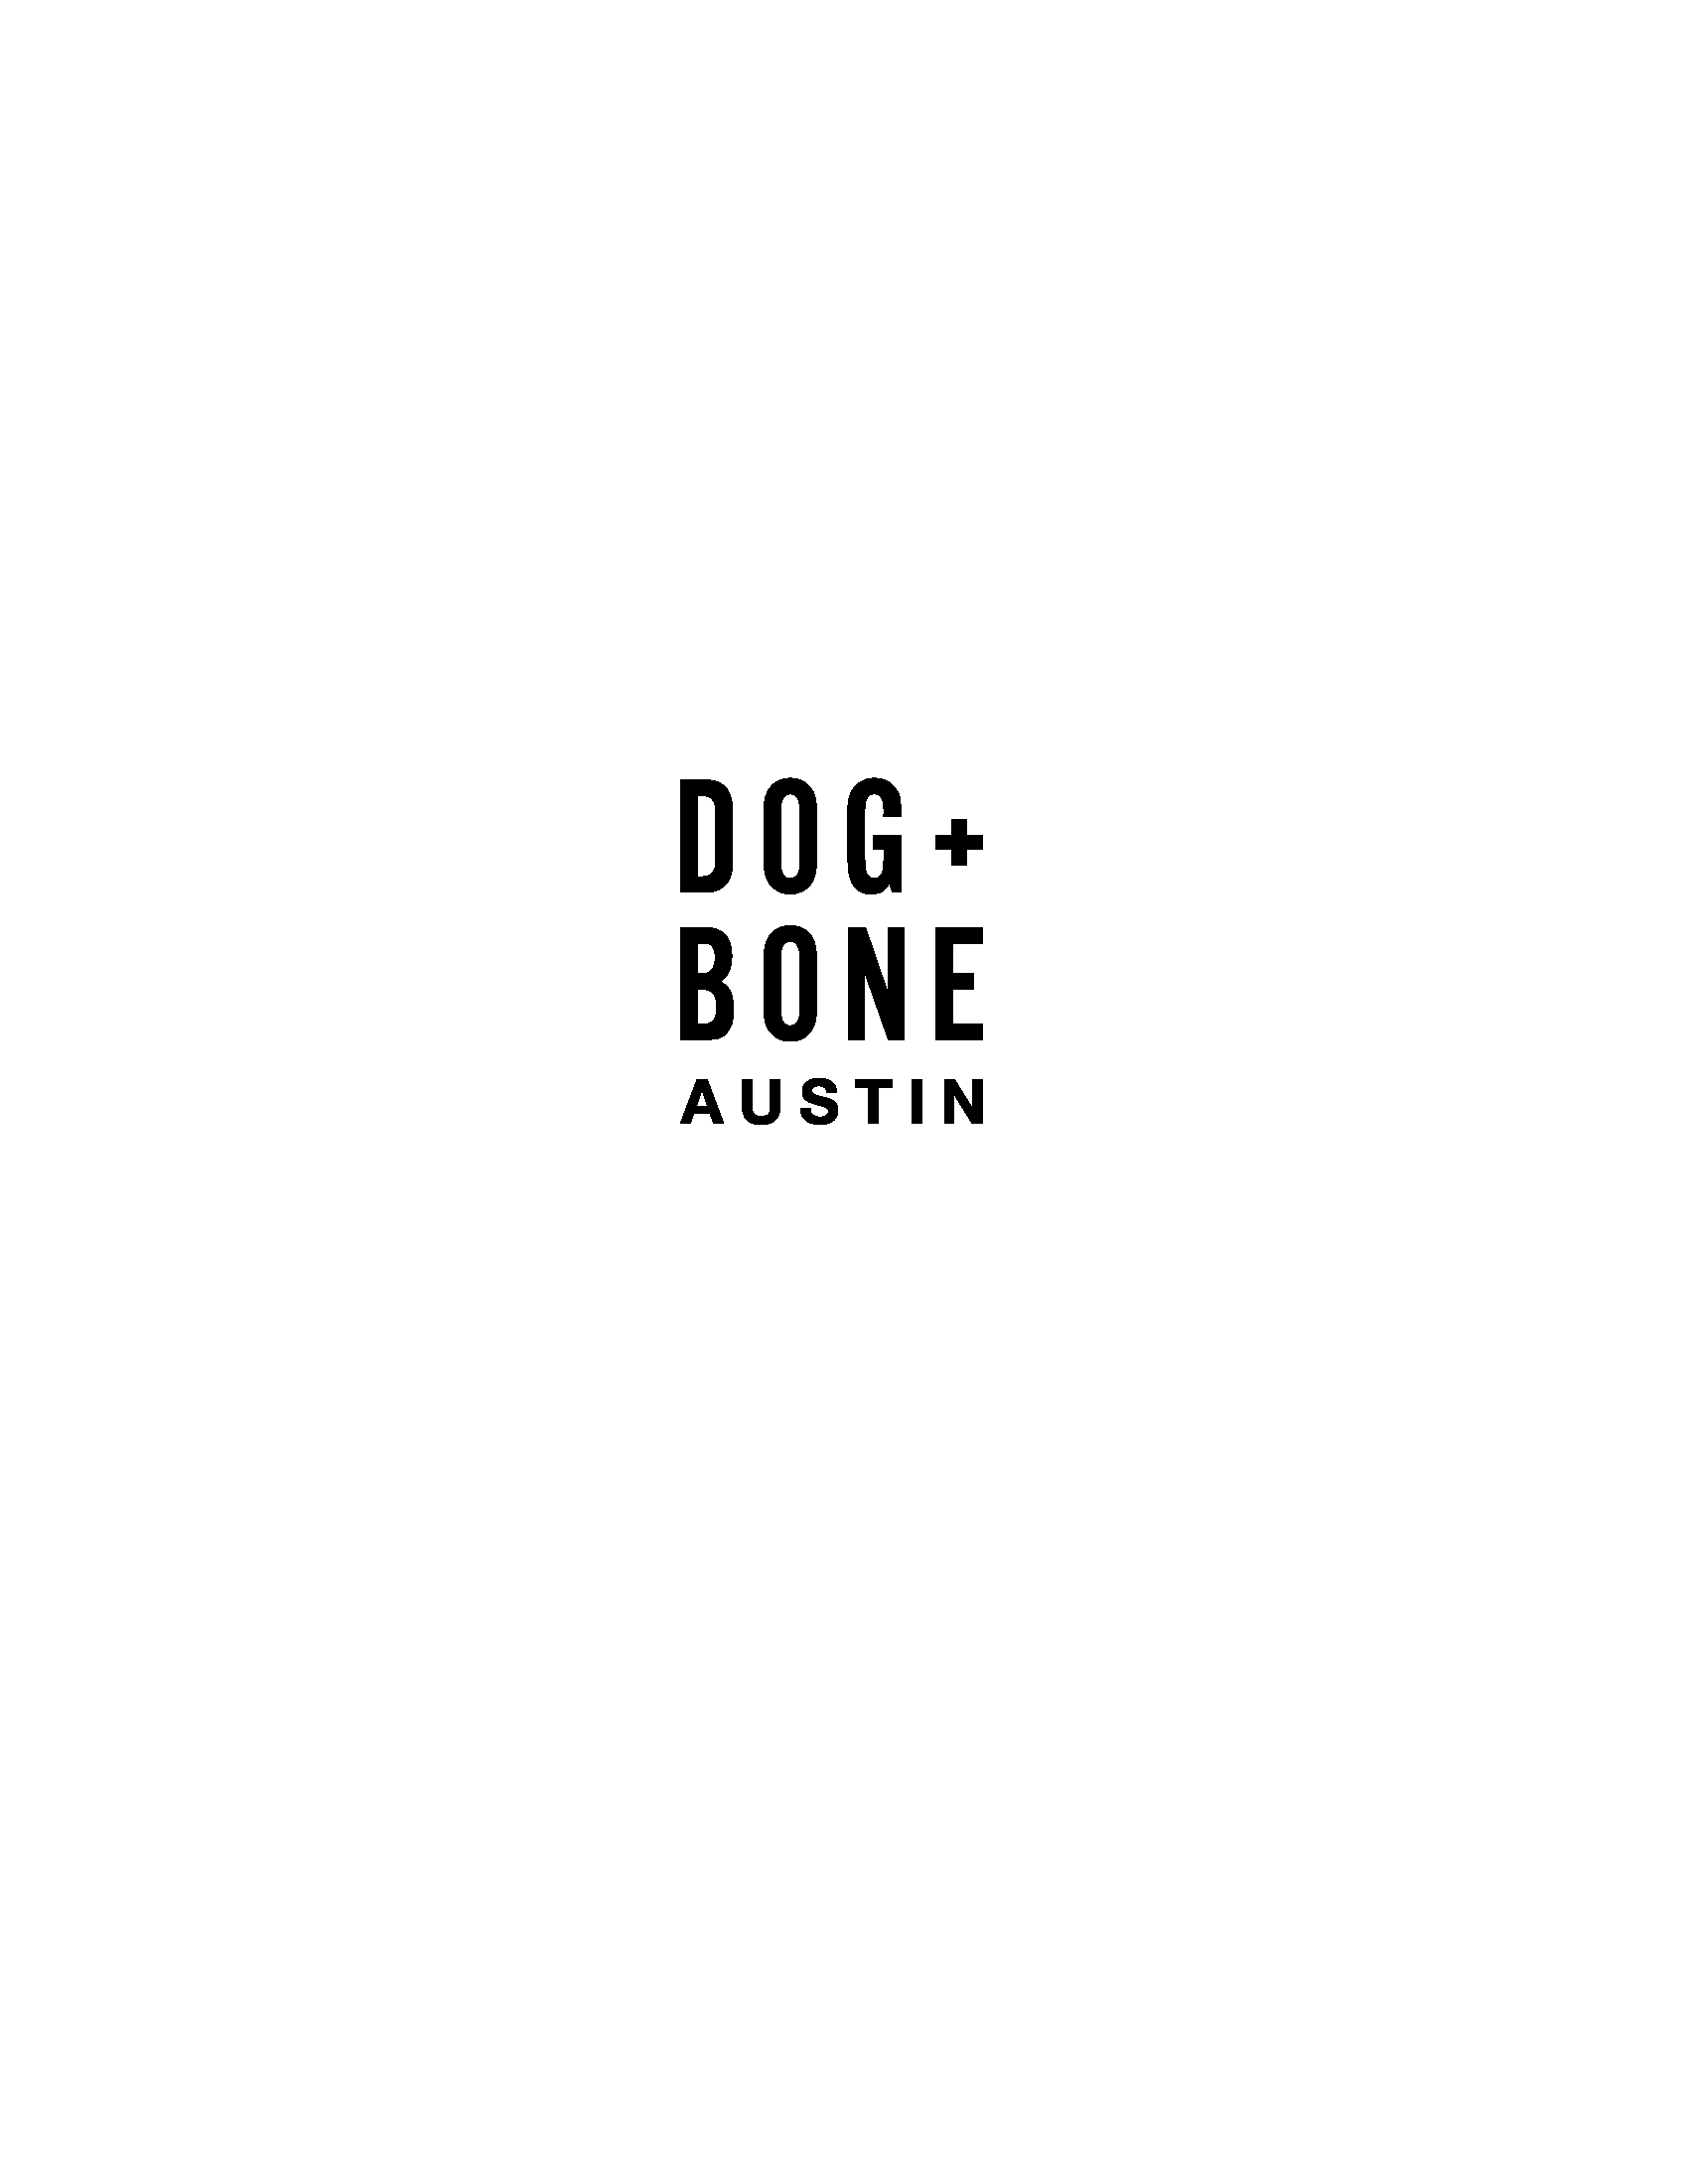 Bog_plus_Bone_Logo_R2.png